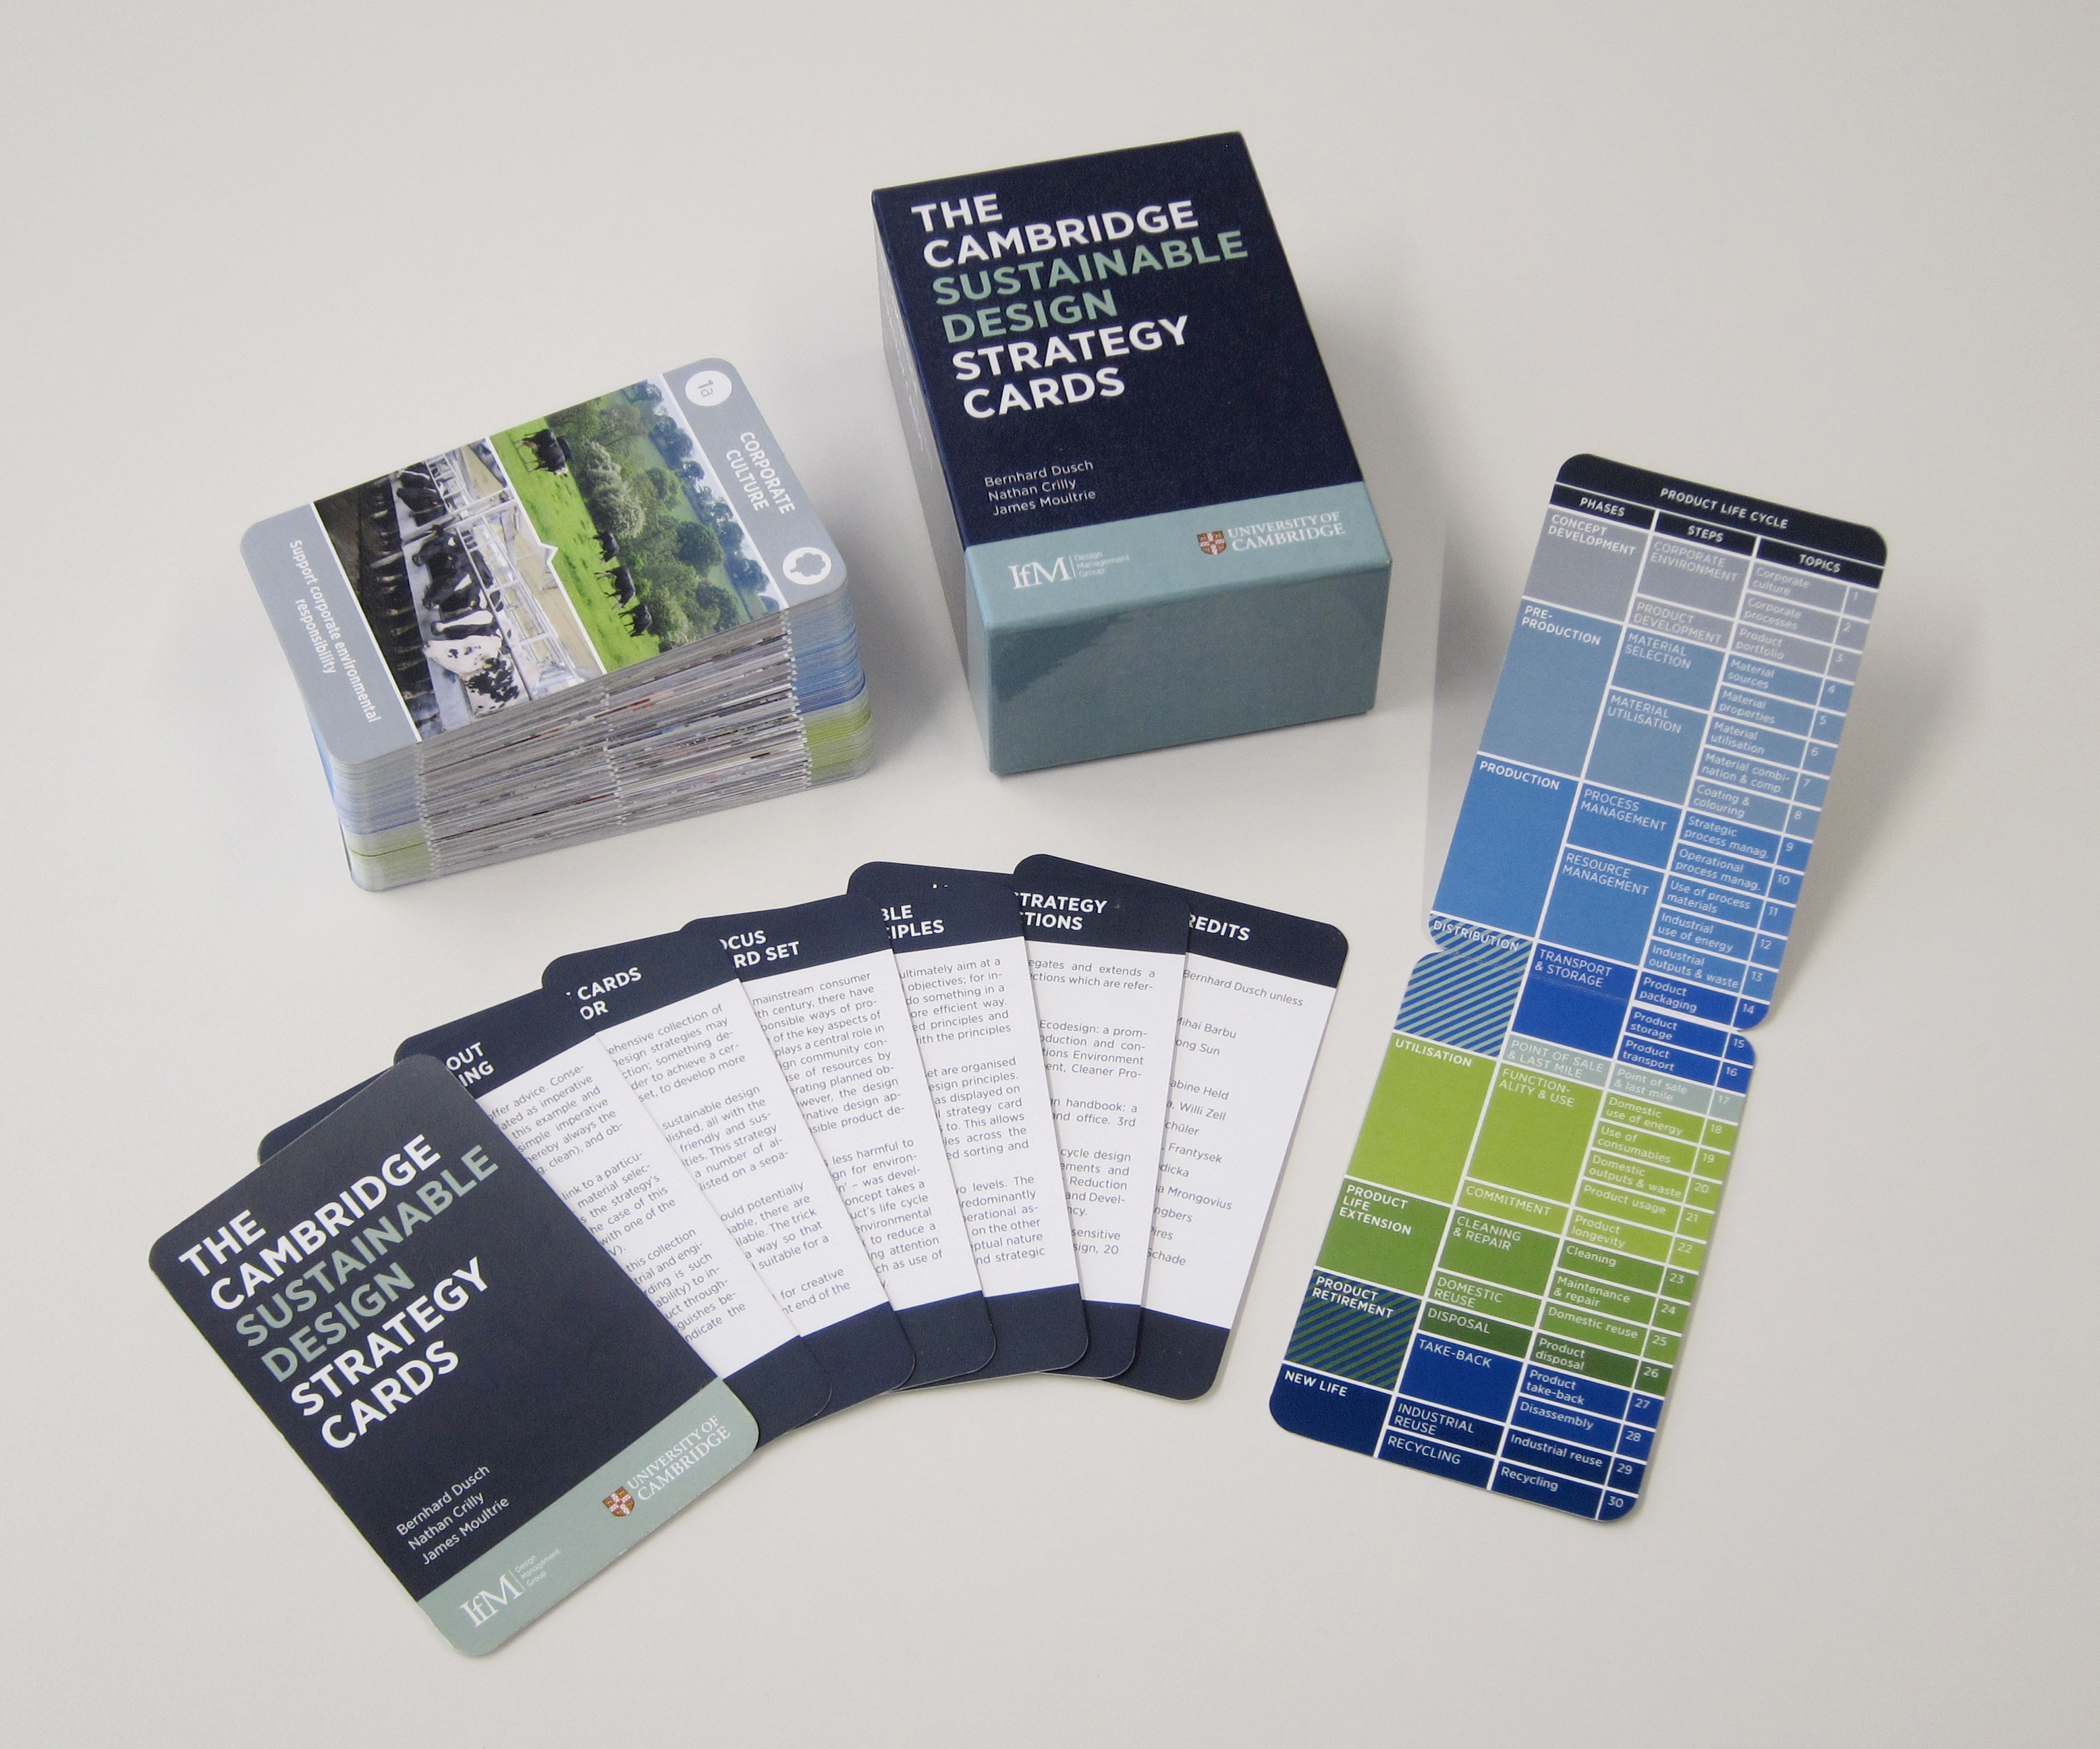 Cambridge Sustainable Design cards